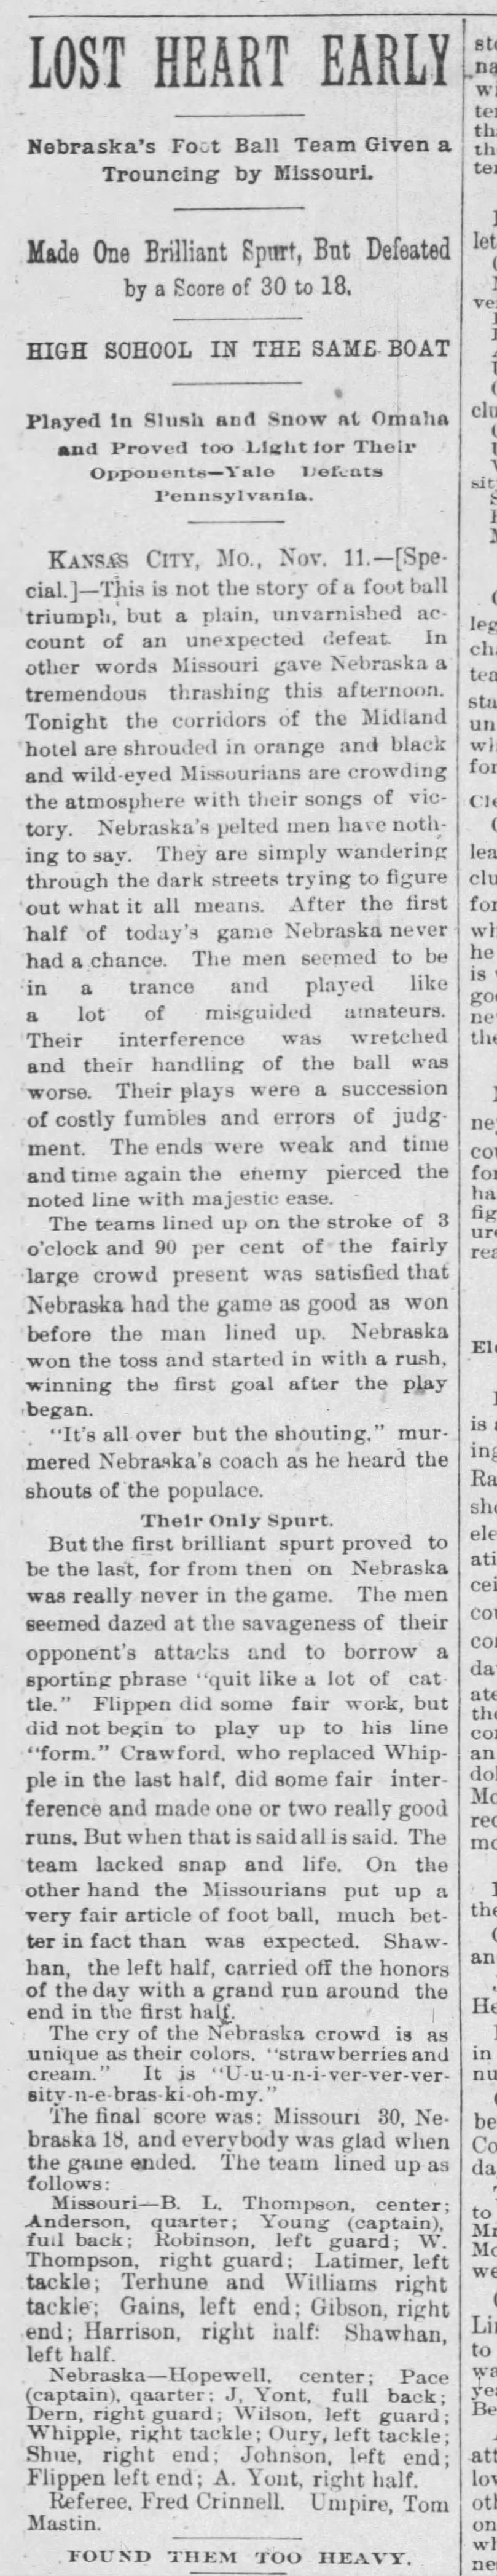 1893 Nebraska-Missouri football, Journal